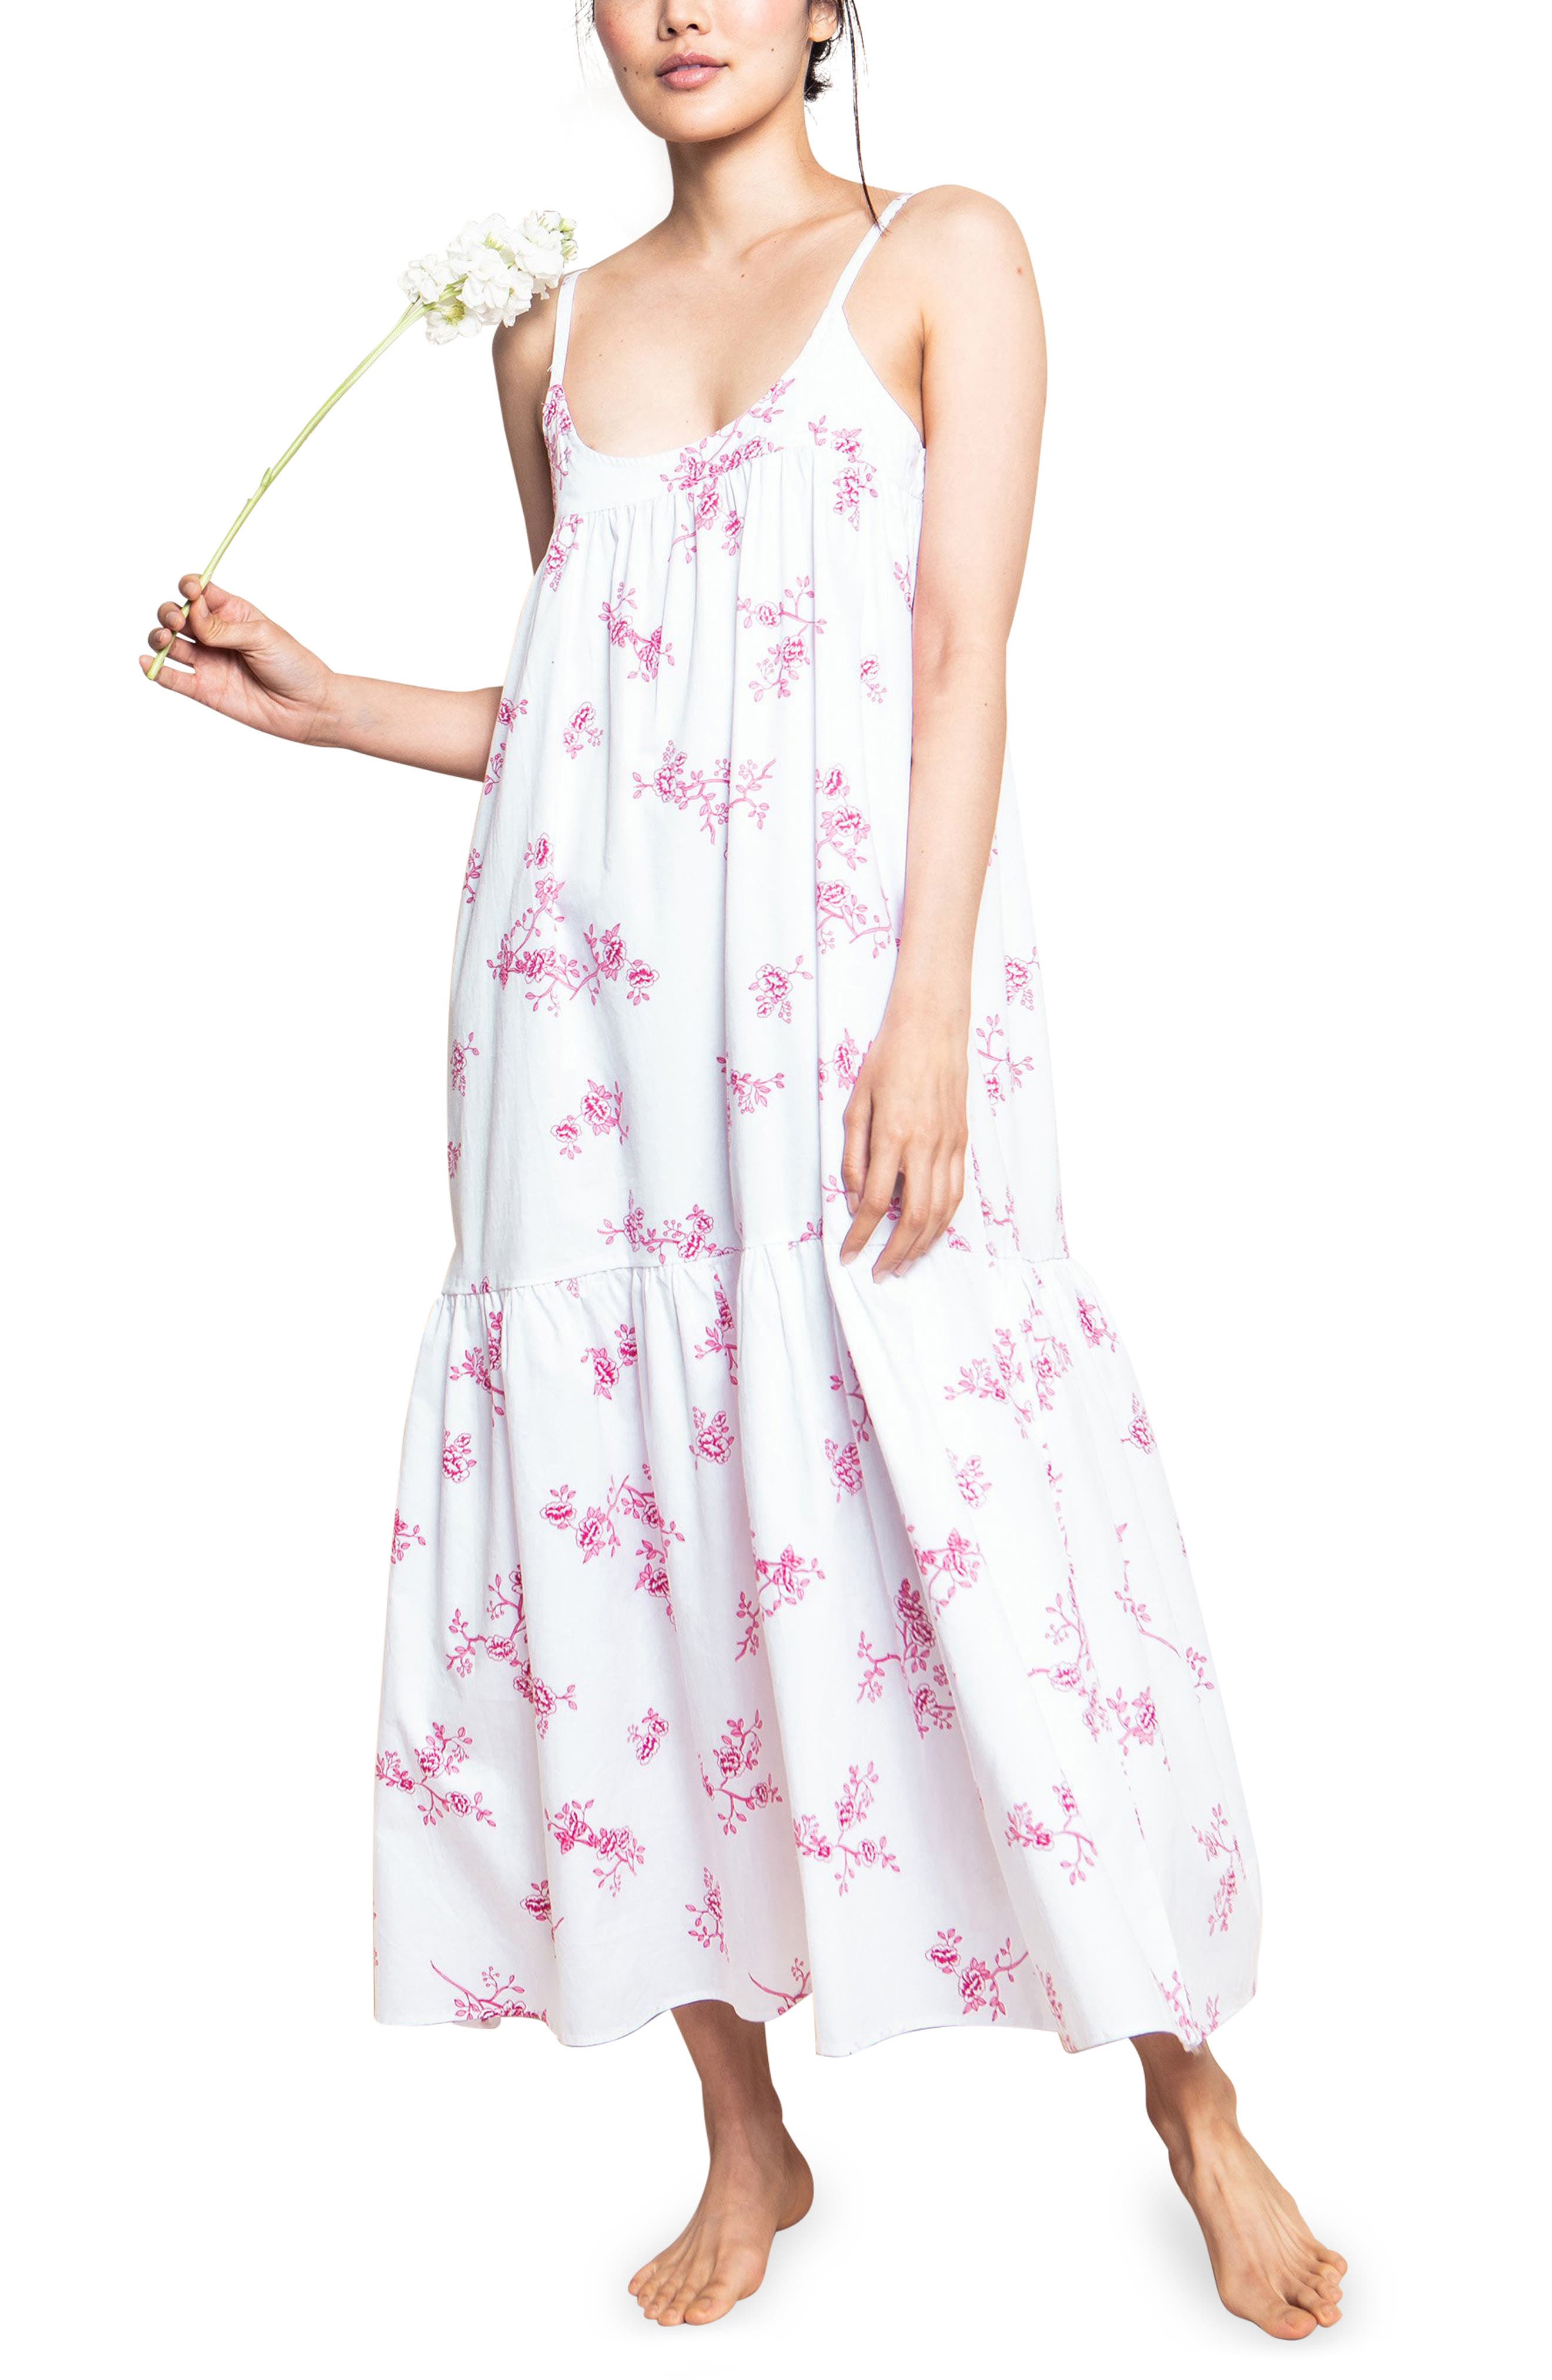 Women's Cotton Long Sleeve Nightie Night Gown Pink Floral Print Maxi Sleepwear